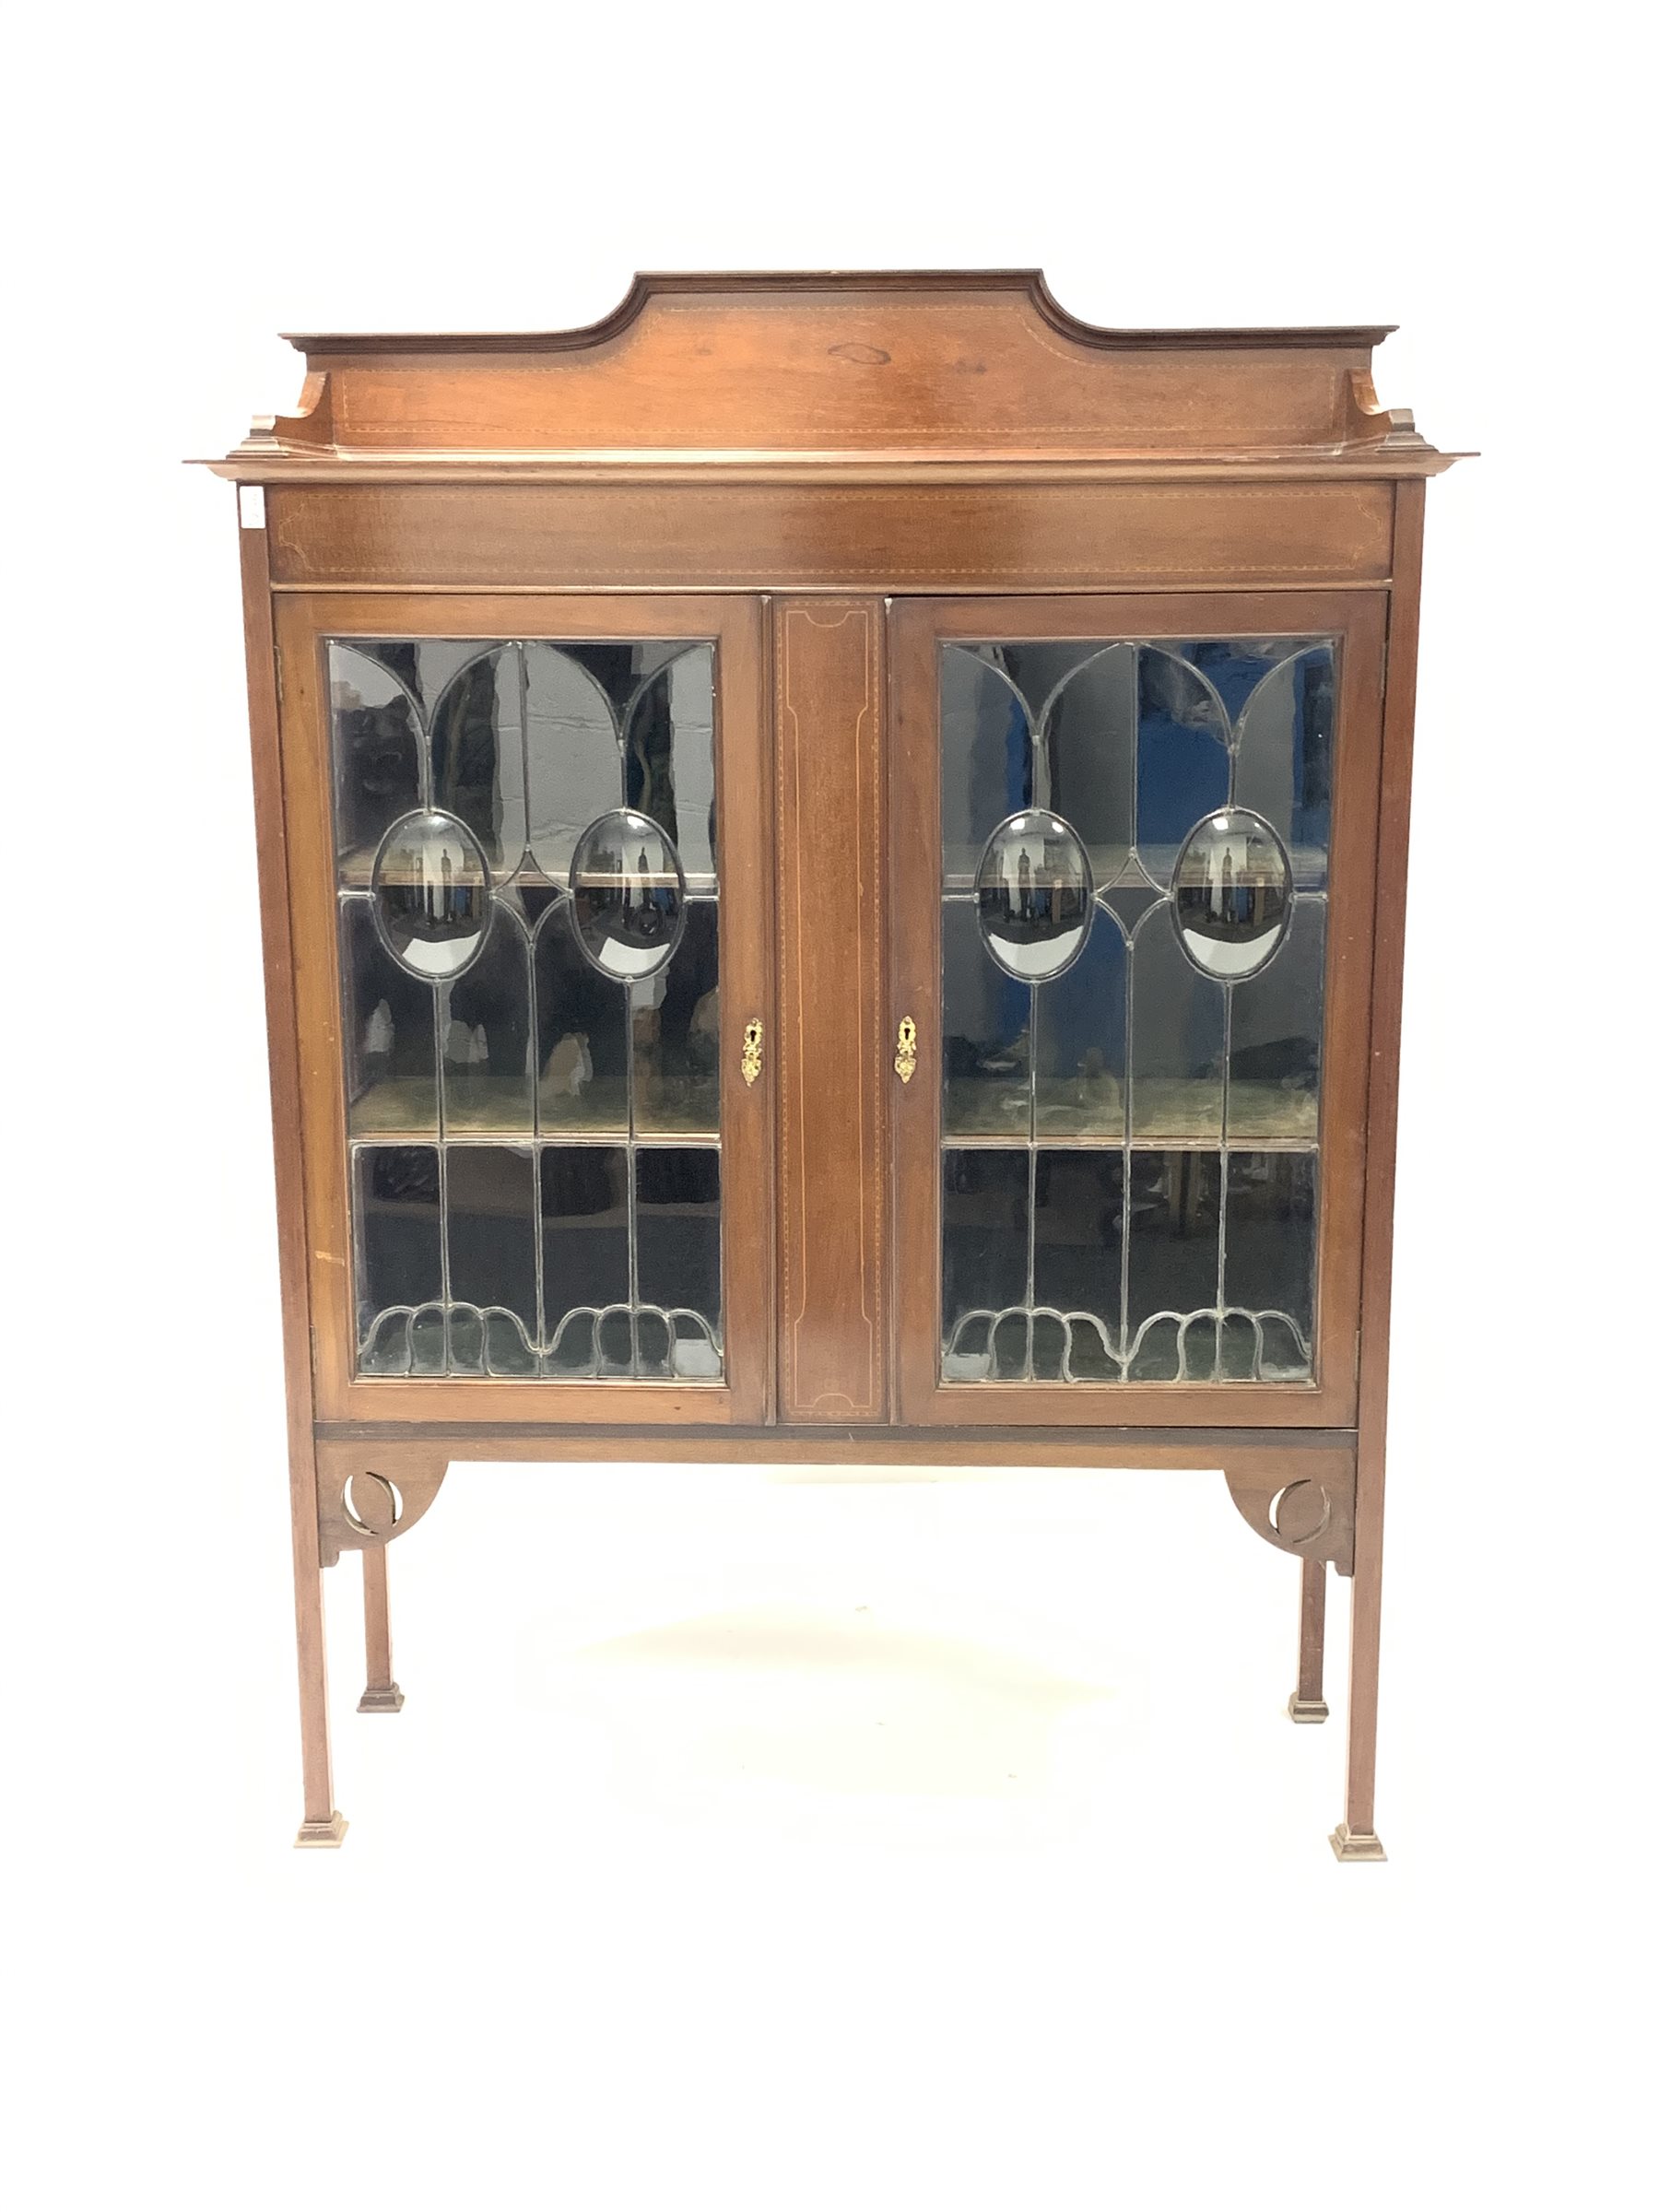 Edwardian Art Nouveau inlaid mahogany display cabinet, with raised back over two glazed doors, raise